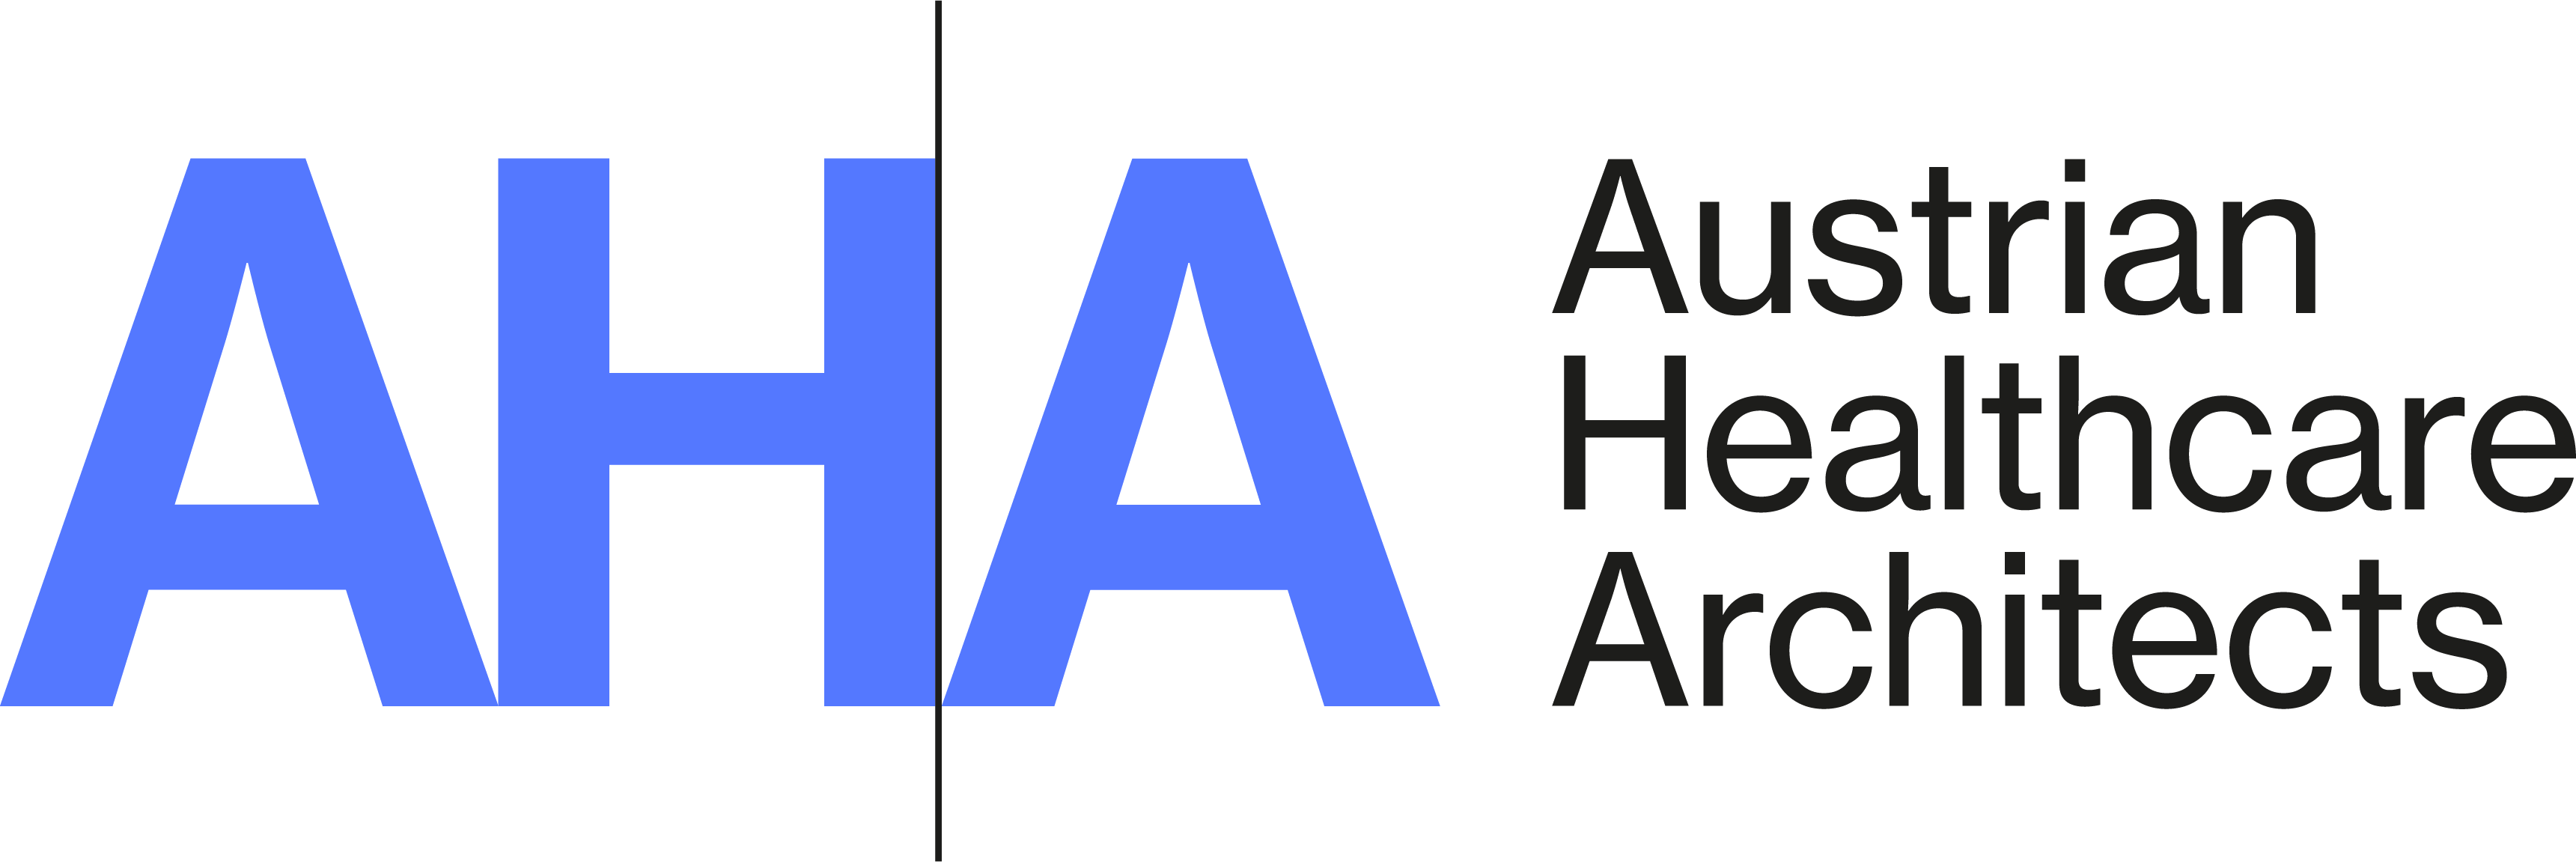 Austrian Healthcare Architects